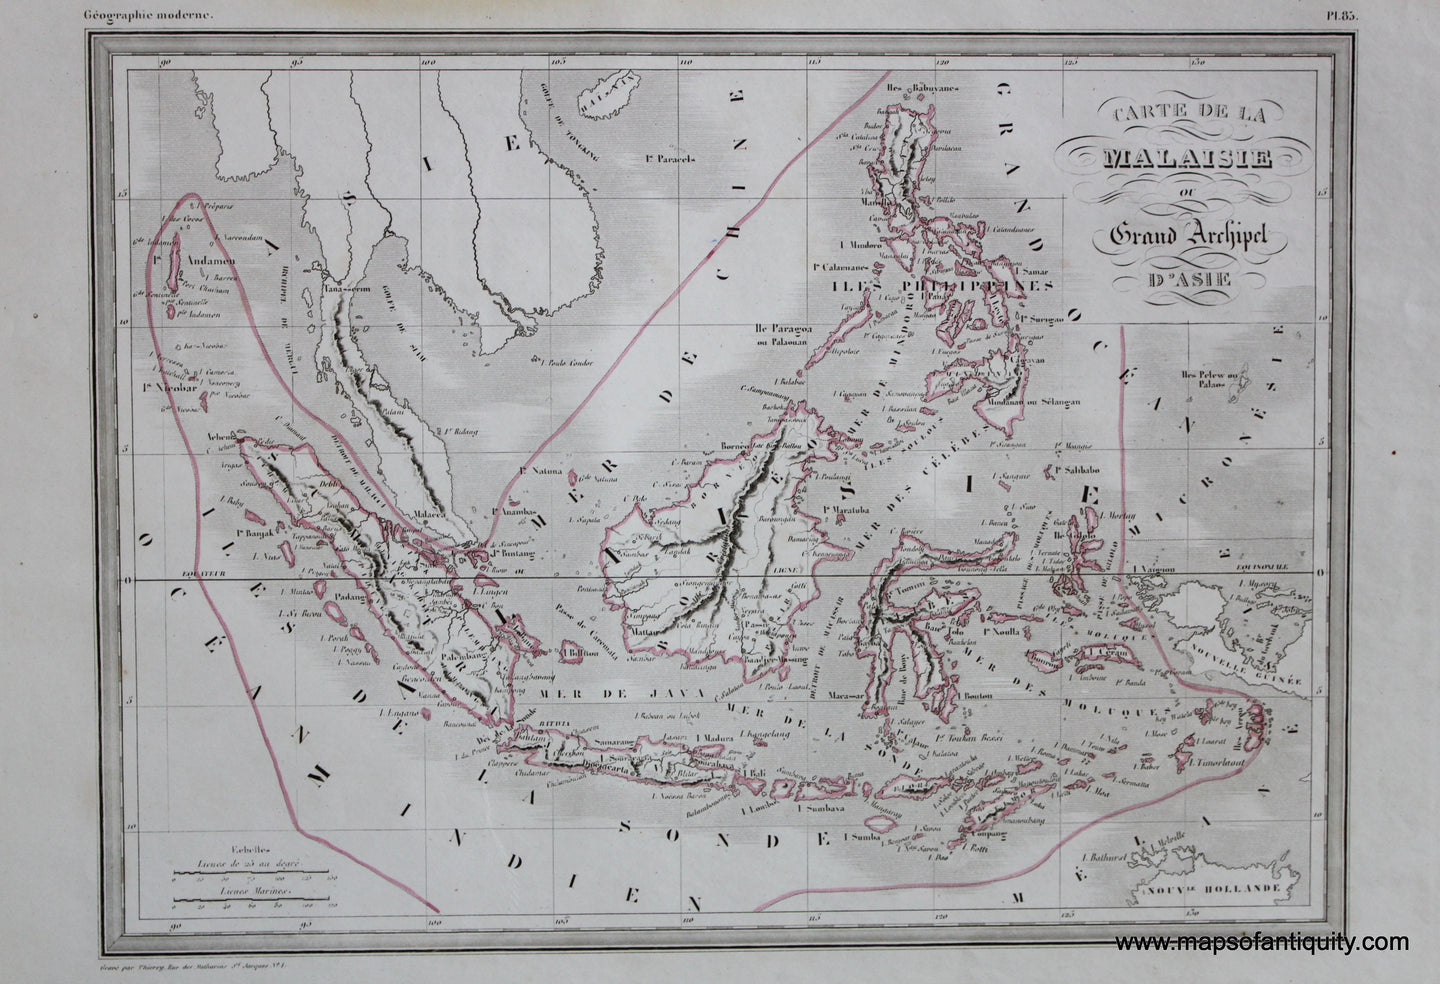 Antique-Hand-Colored-Map-Carte-de-La-Malaisie-ou-Grand-Archipel-D'Asie-Asia-Asia-General-1846-M.-Malte-Brun-Maps-Of-Antiquity